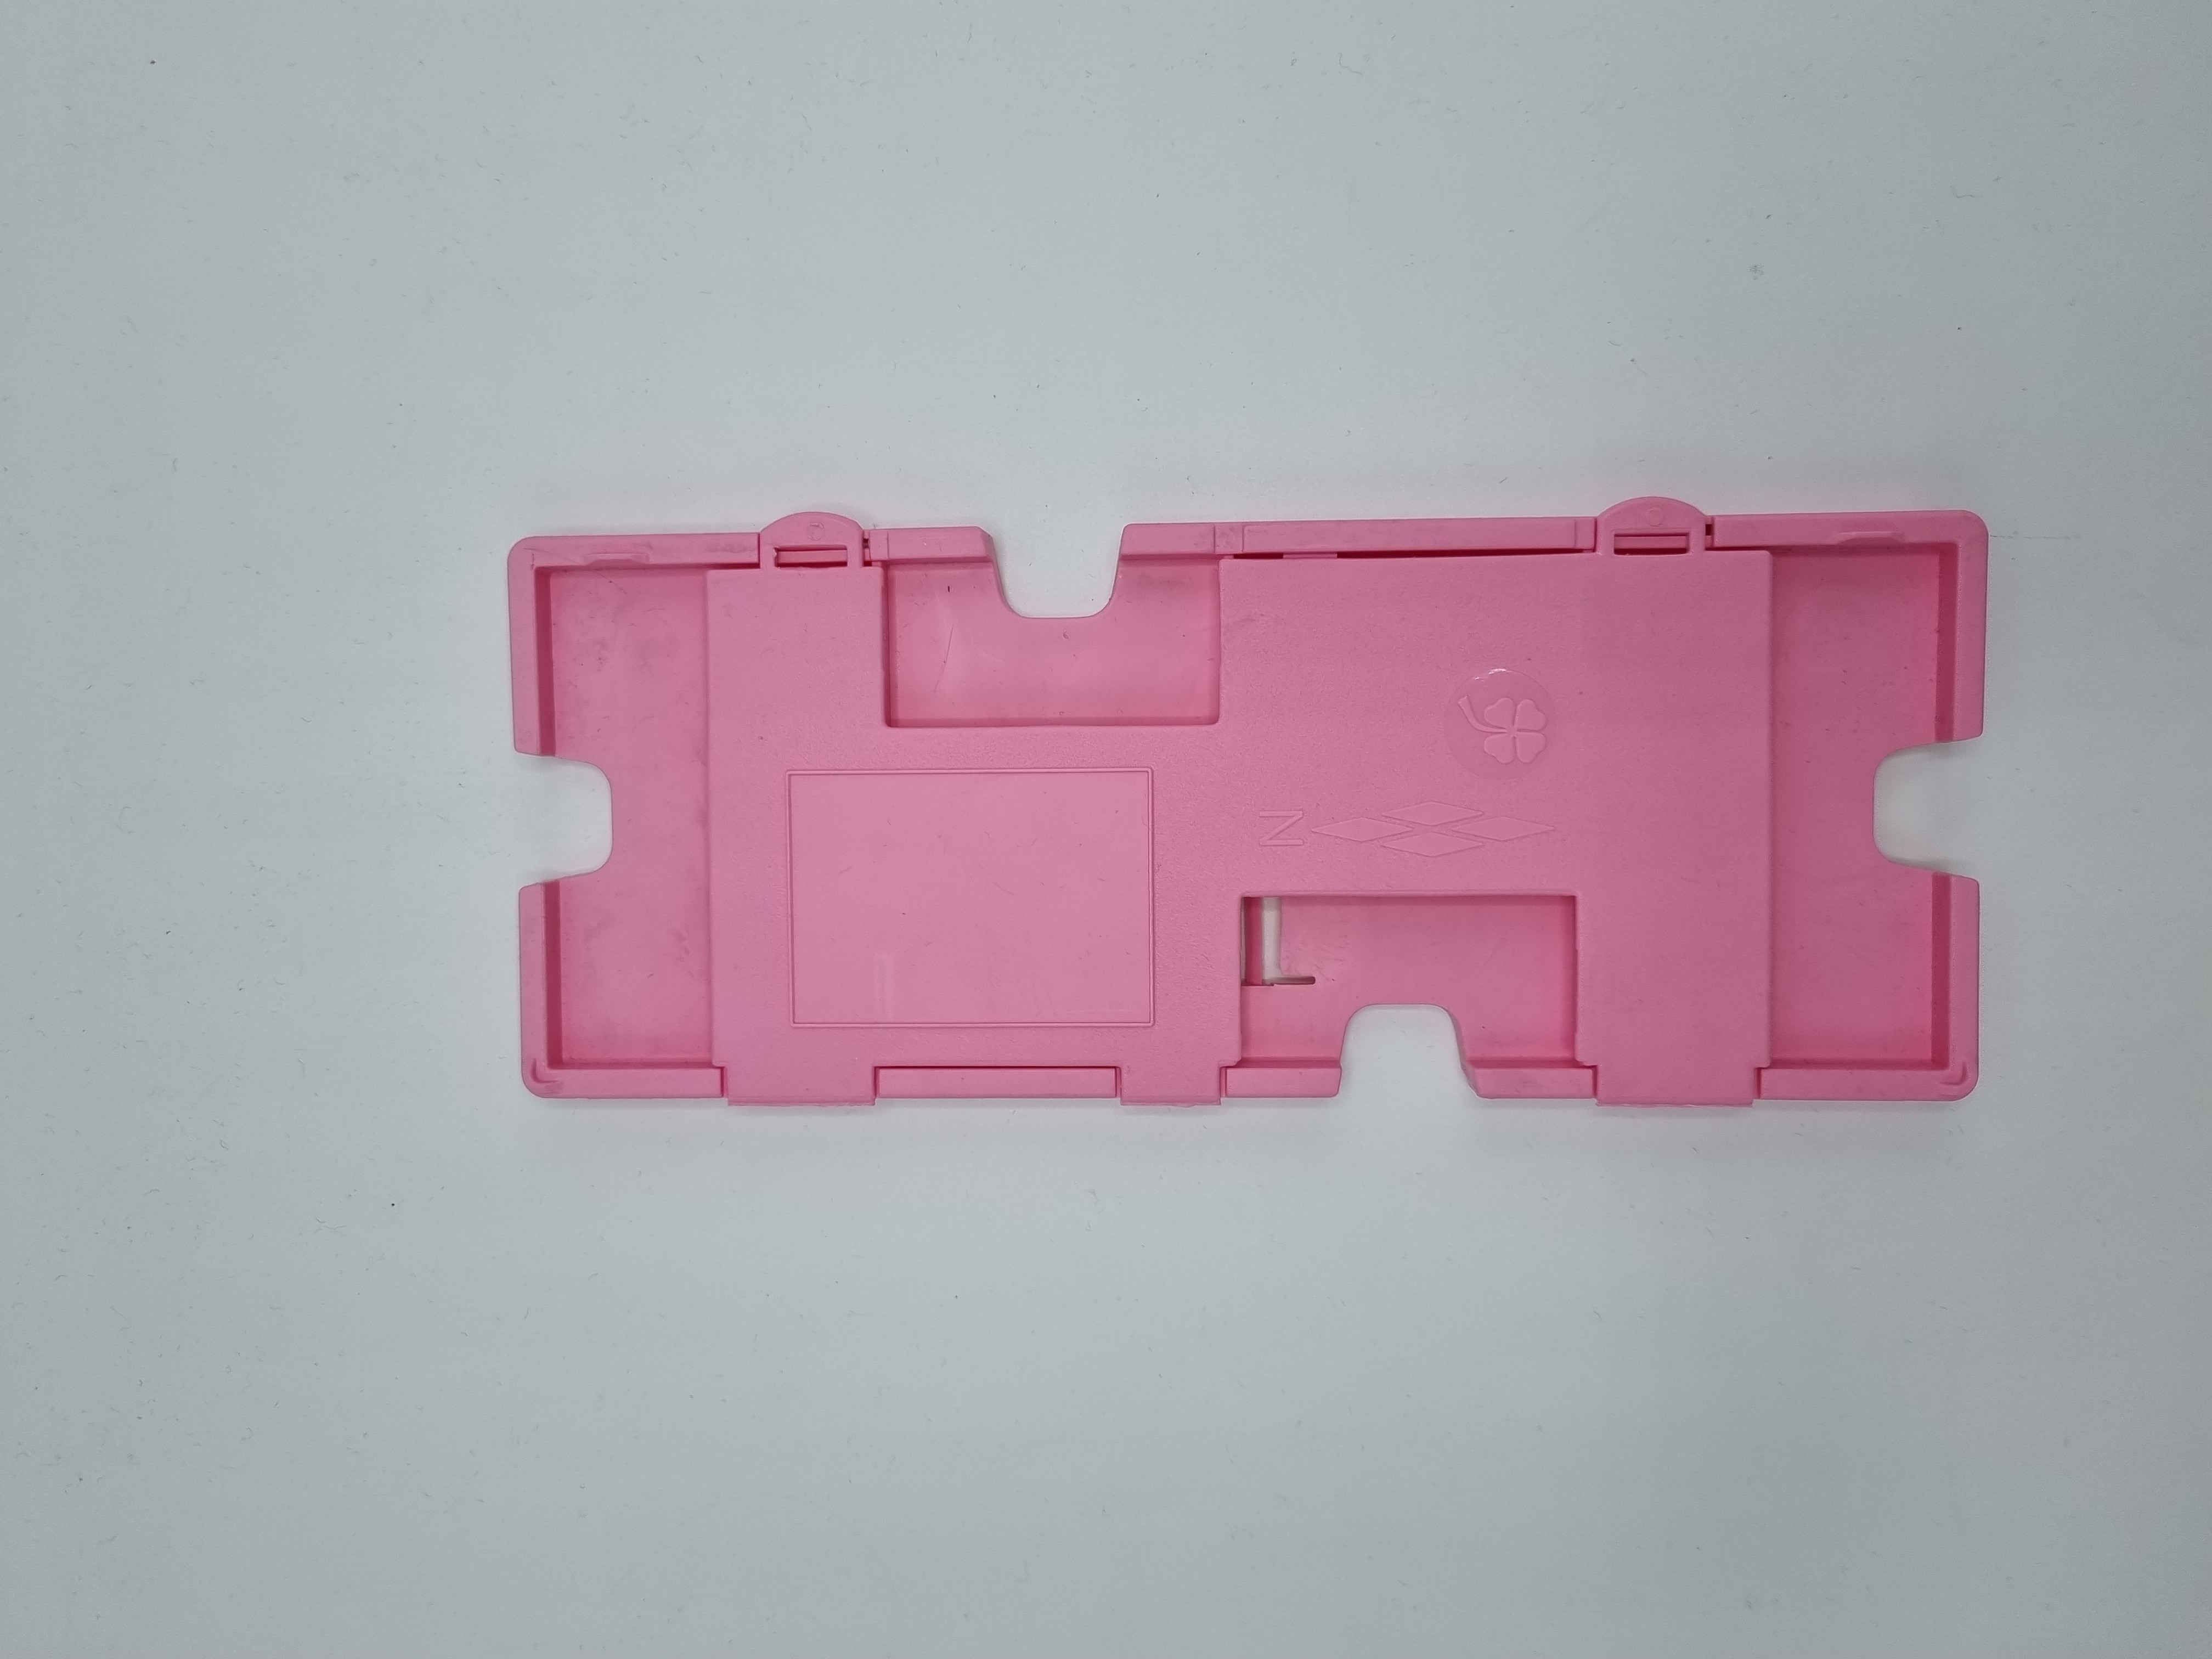 Duplimate board - roze (per stuk)